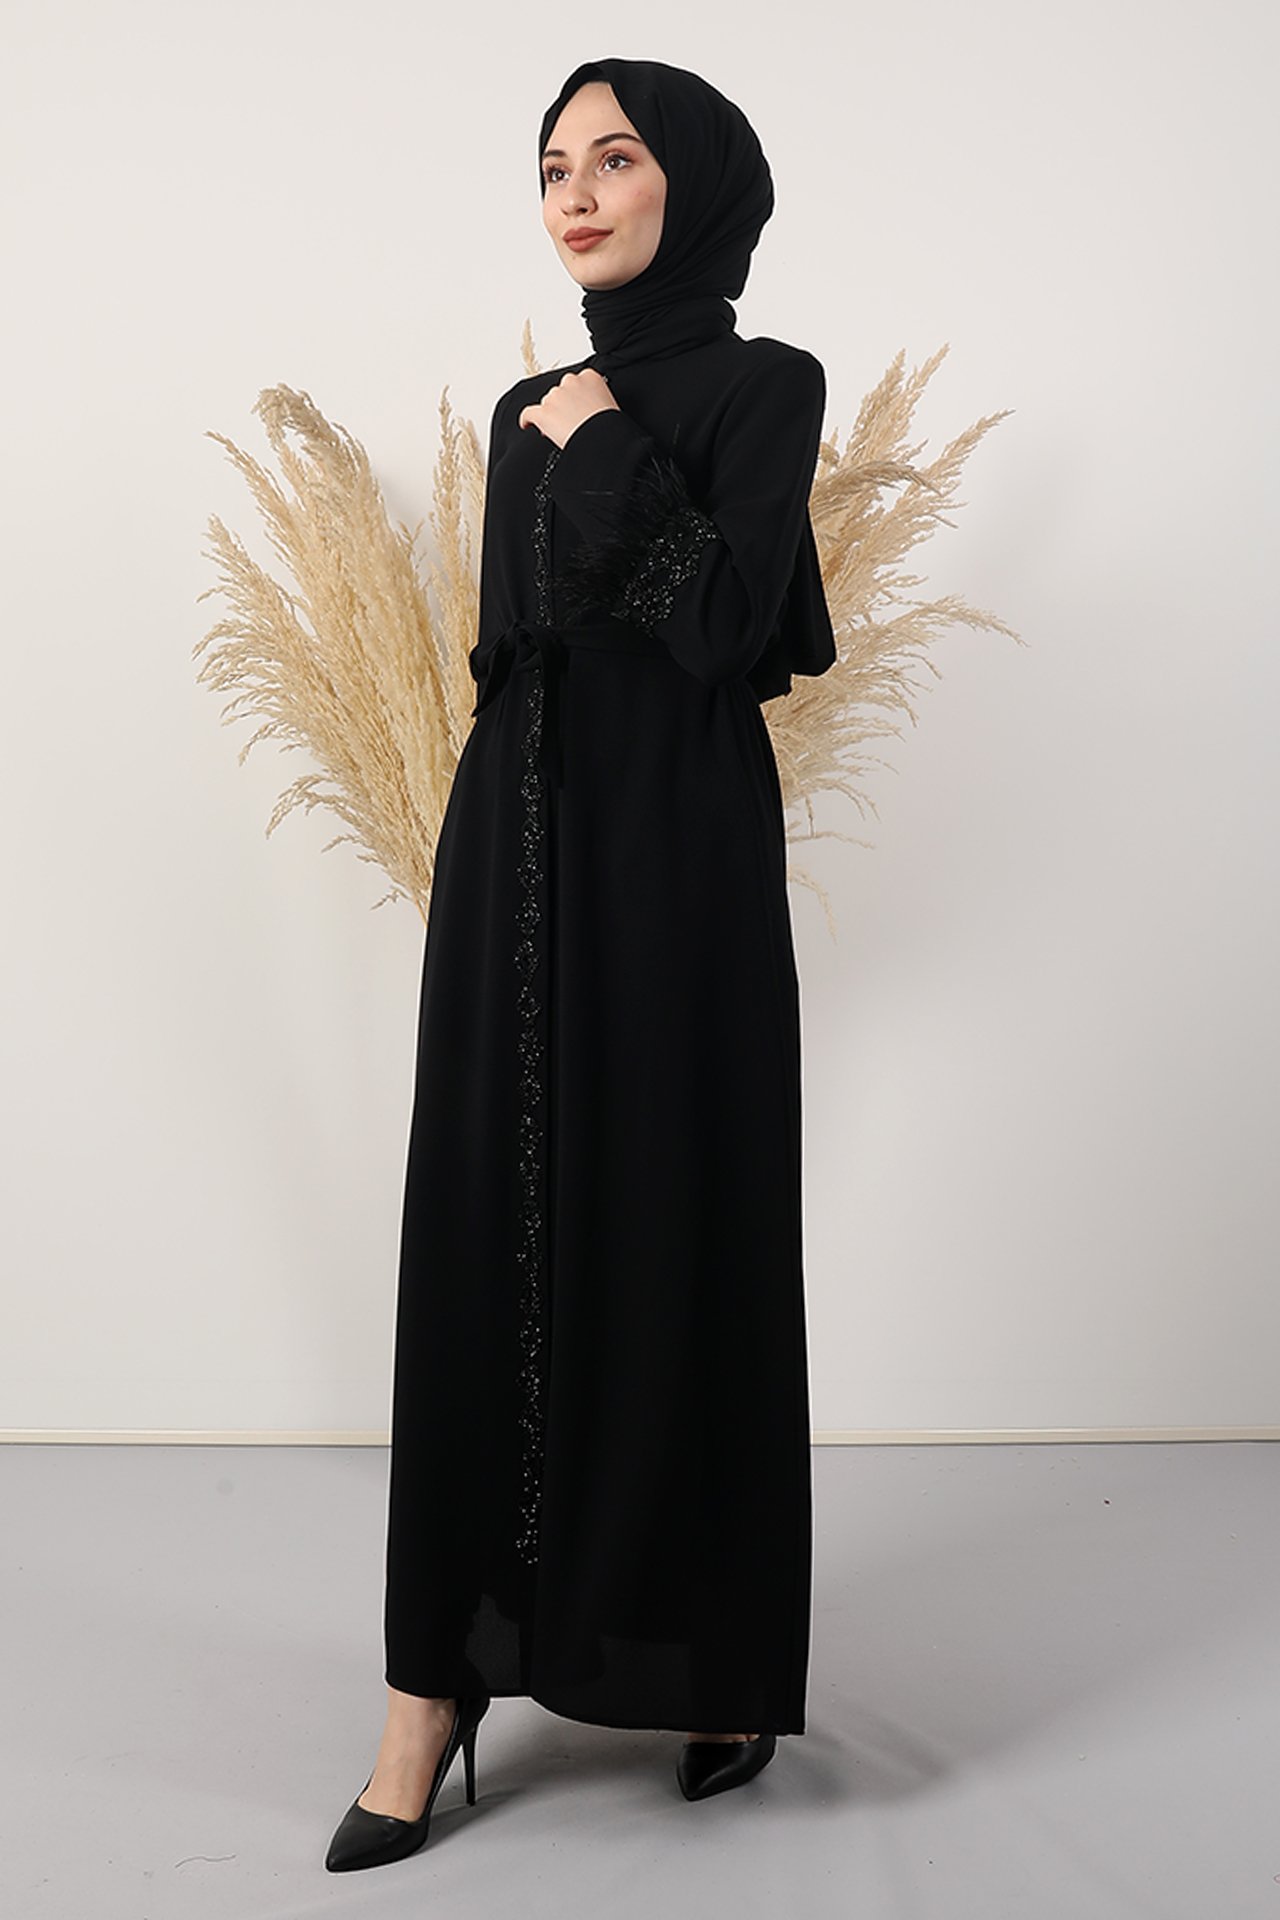 GİZAGİYİM - Kolu Tüy Detay Ferace Elbise Siyah